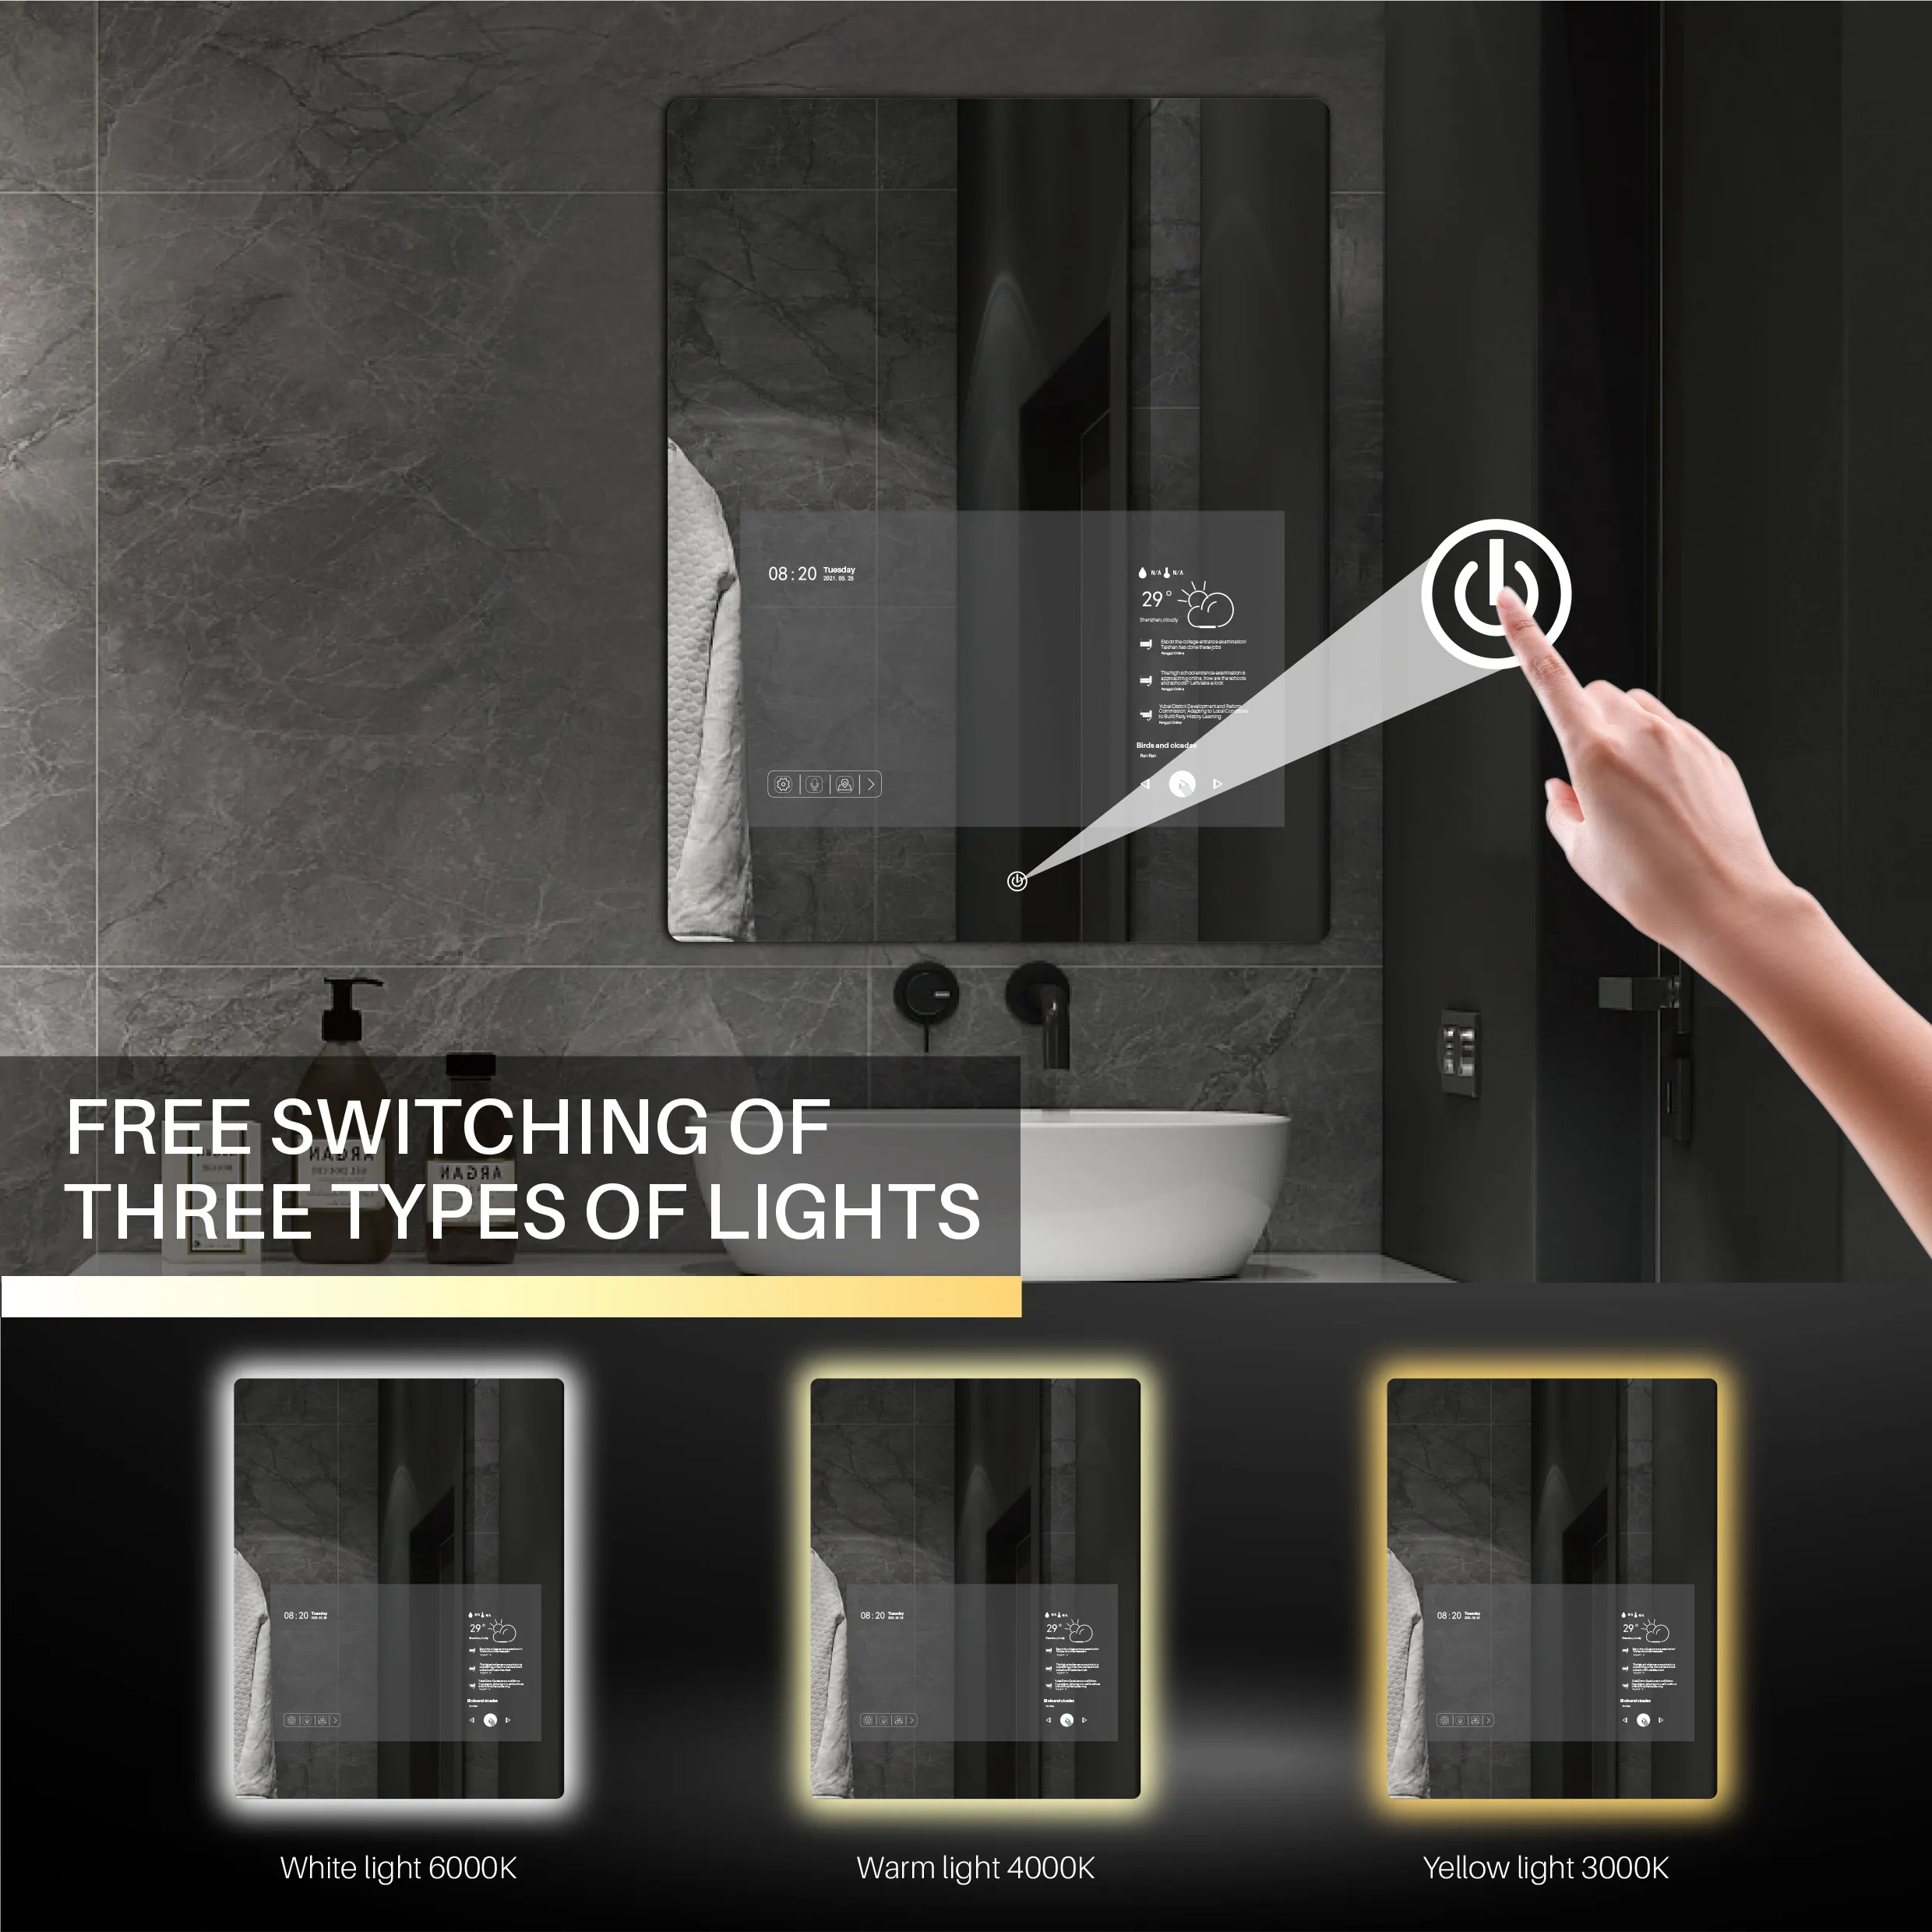 Cermin rias kamar mandi Full Hd cermin Tv Android/cermin ajaib rias kamar mandi pintar dengan kualitas tinggi